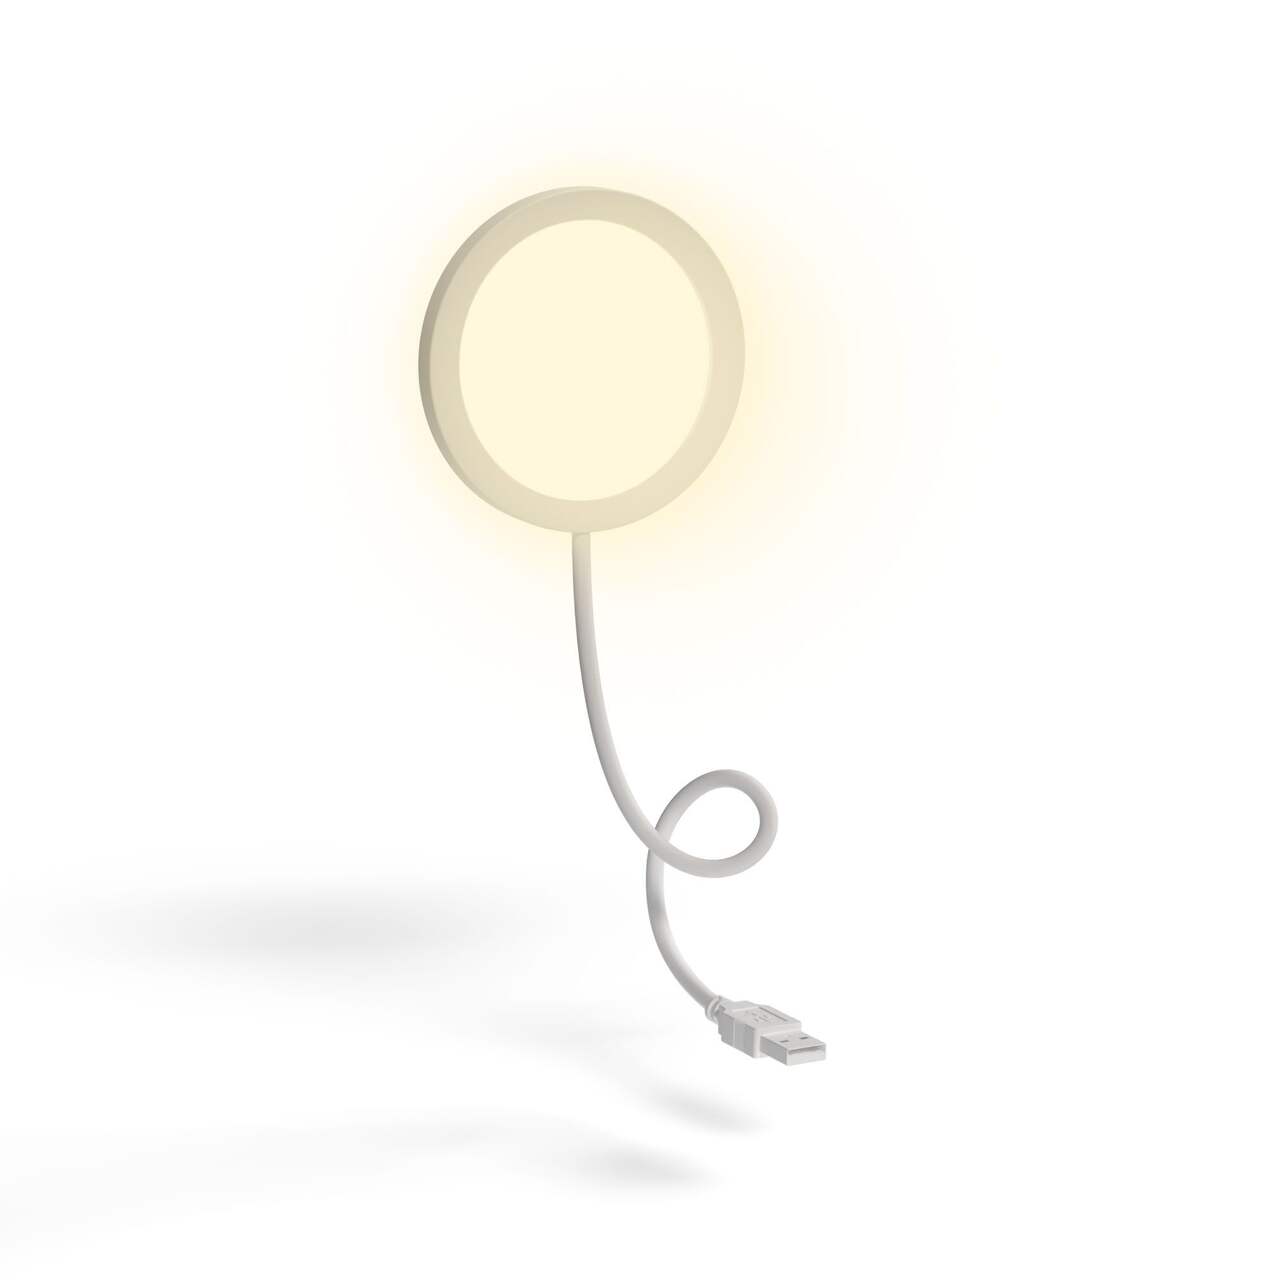 Lampe USB flexible